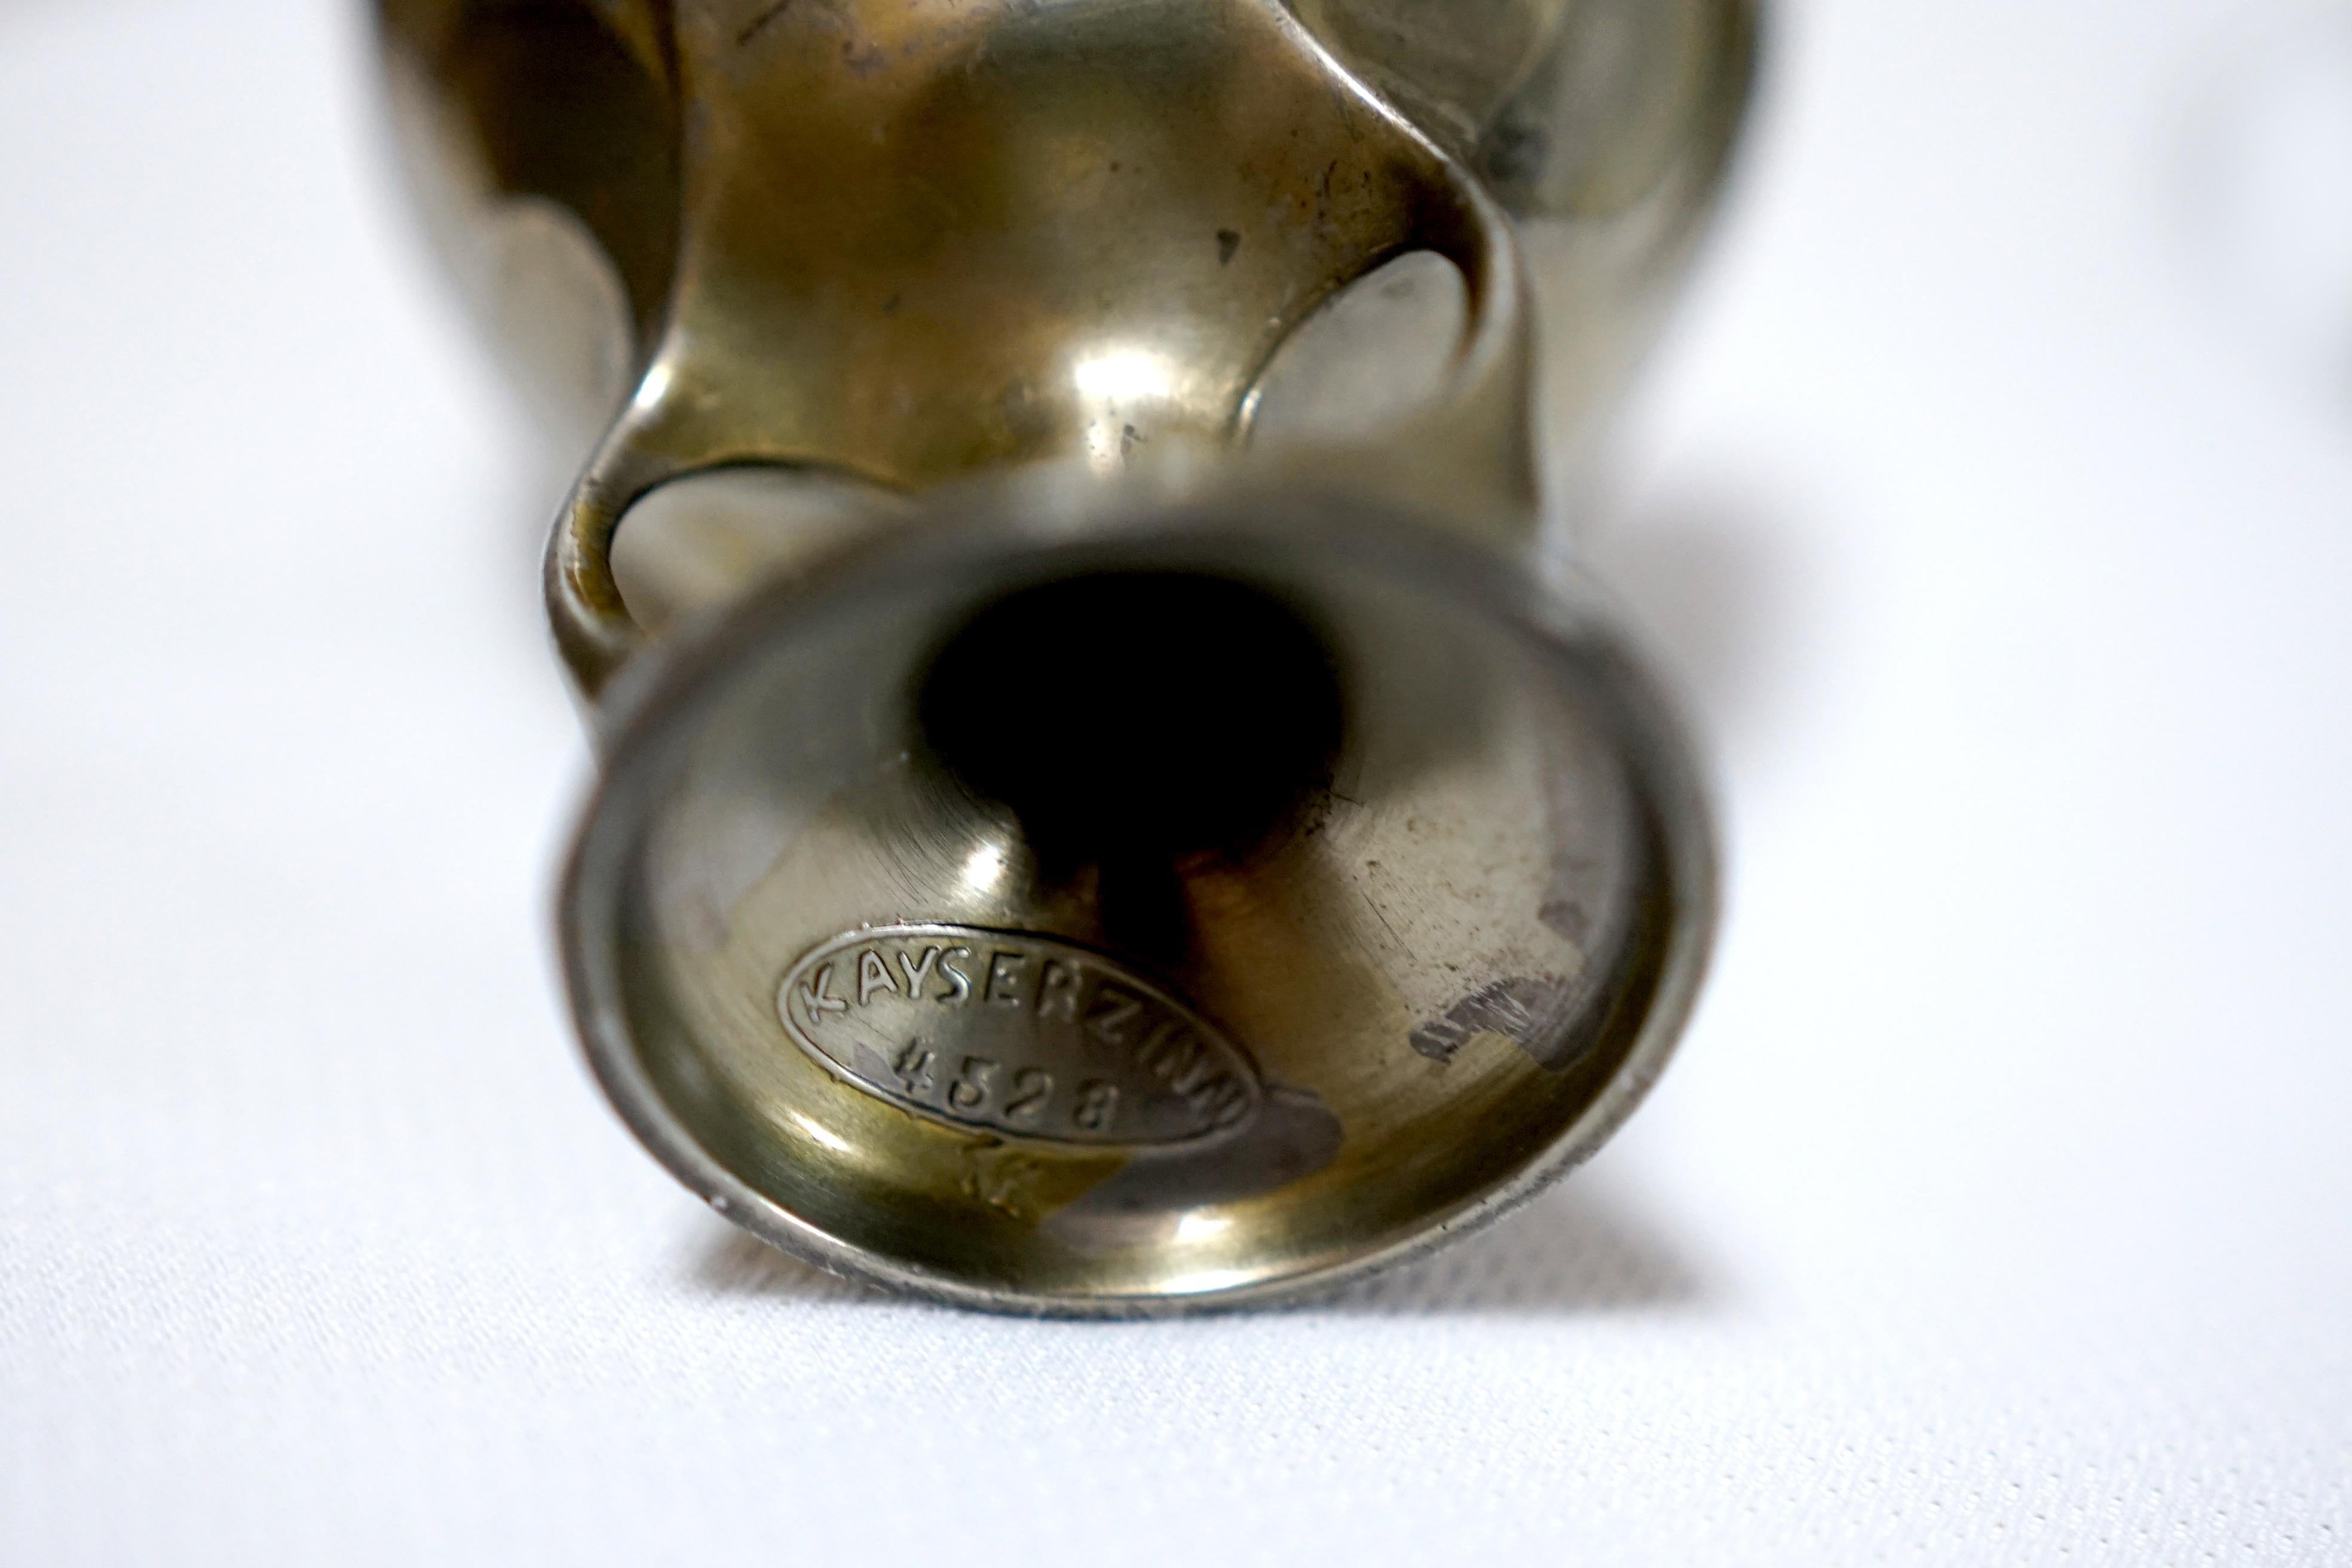 Kayser Zinn, Fein Zinn Late 19th Century Pewter Tankard and Cup For Sale 5